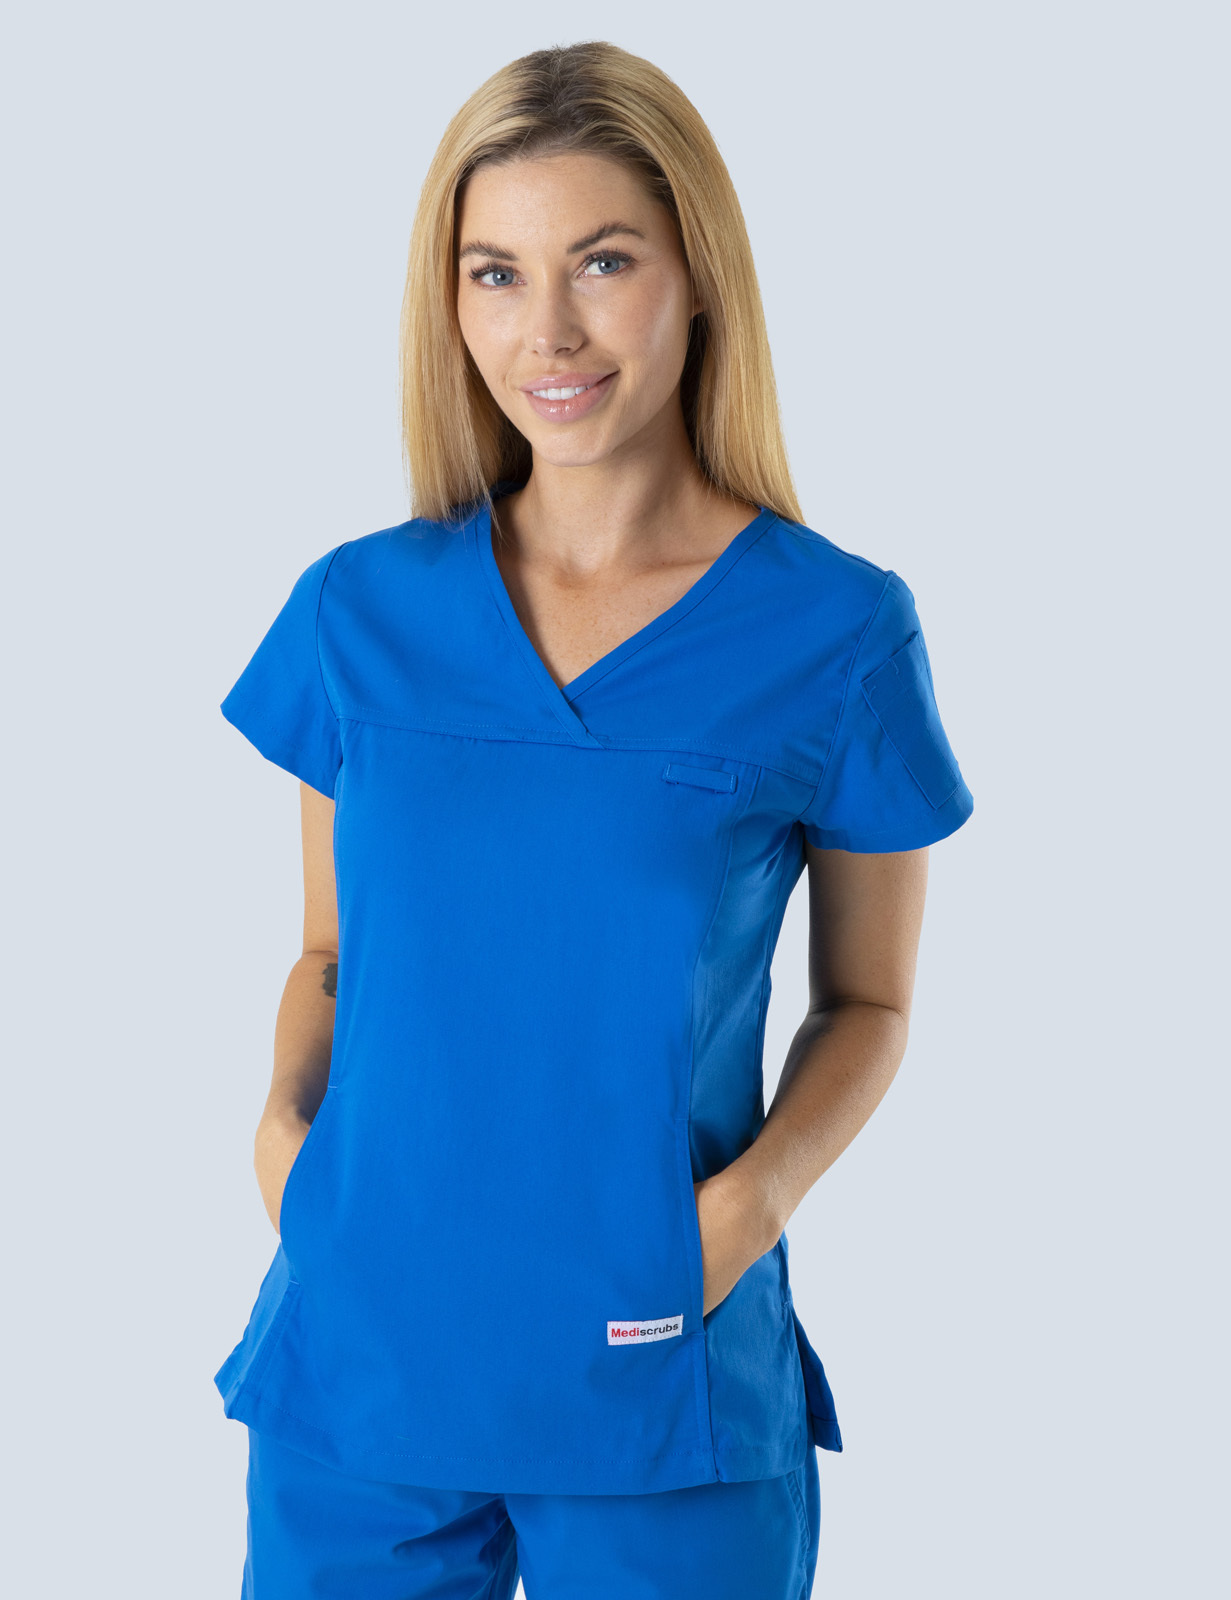 Queensland Children's Hospital Emergency Department Assistant Nurse Unit Manager Uniform Top Bundle  (Women's Fit Top in Royal incl Logos)